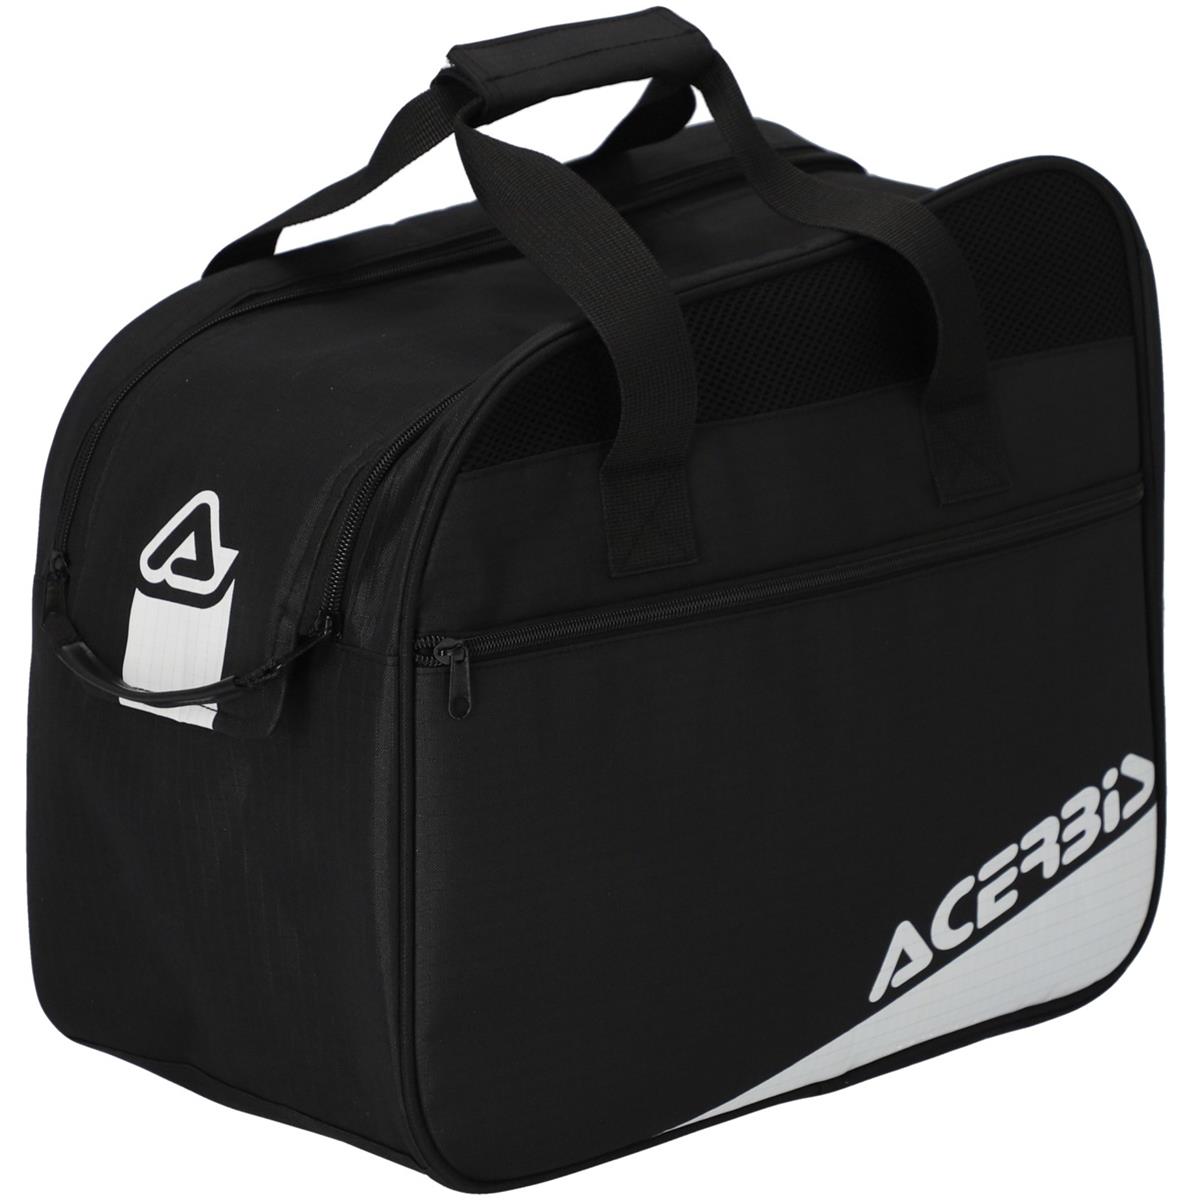 Acerbis Helmet Bag 2.0 Black